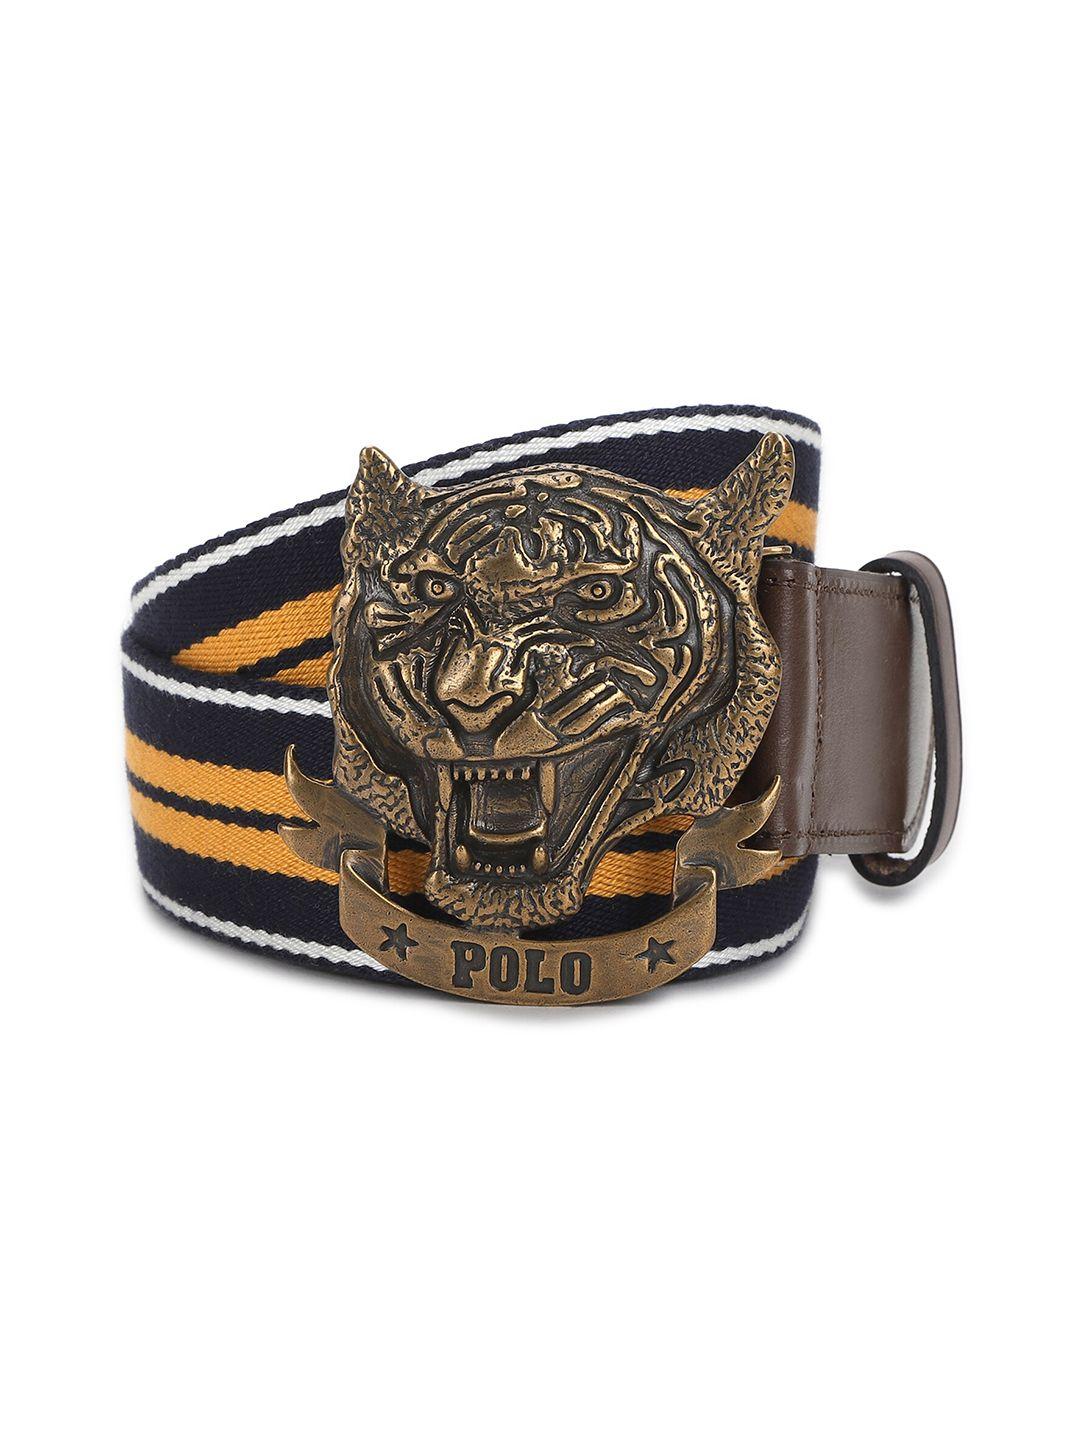 polo ralph lauren men navy blue striped leather belt